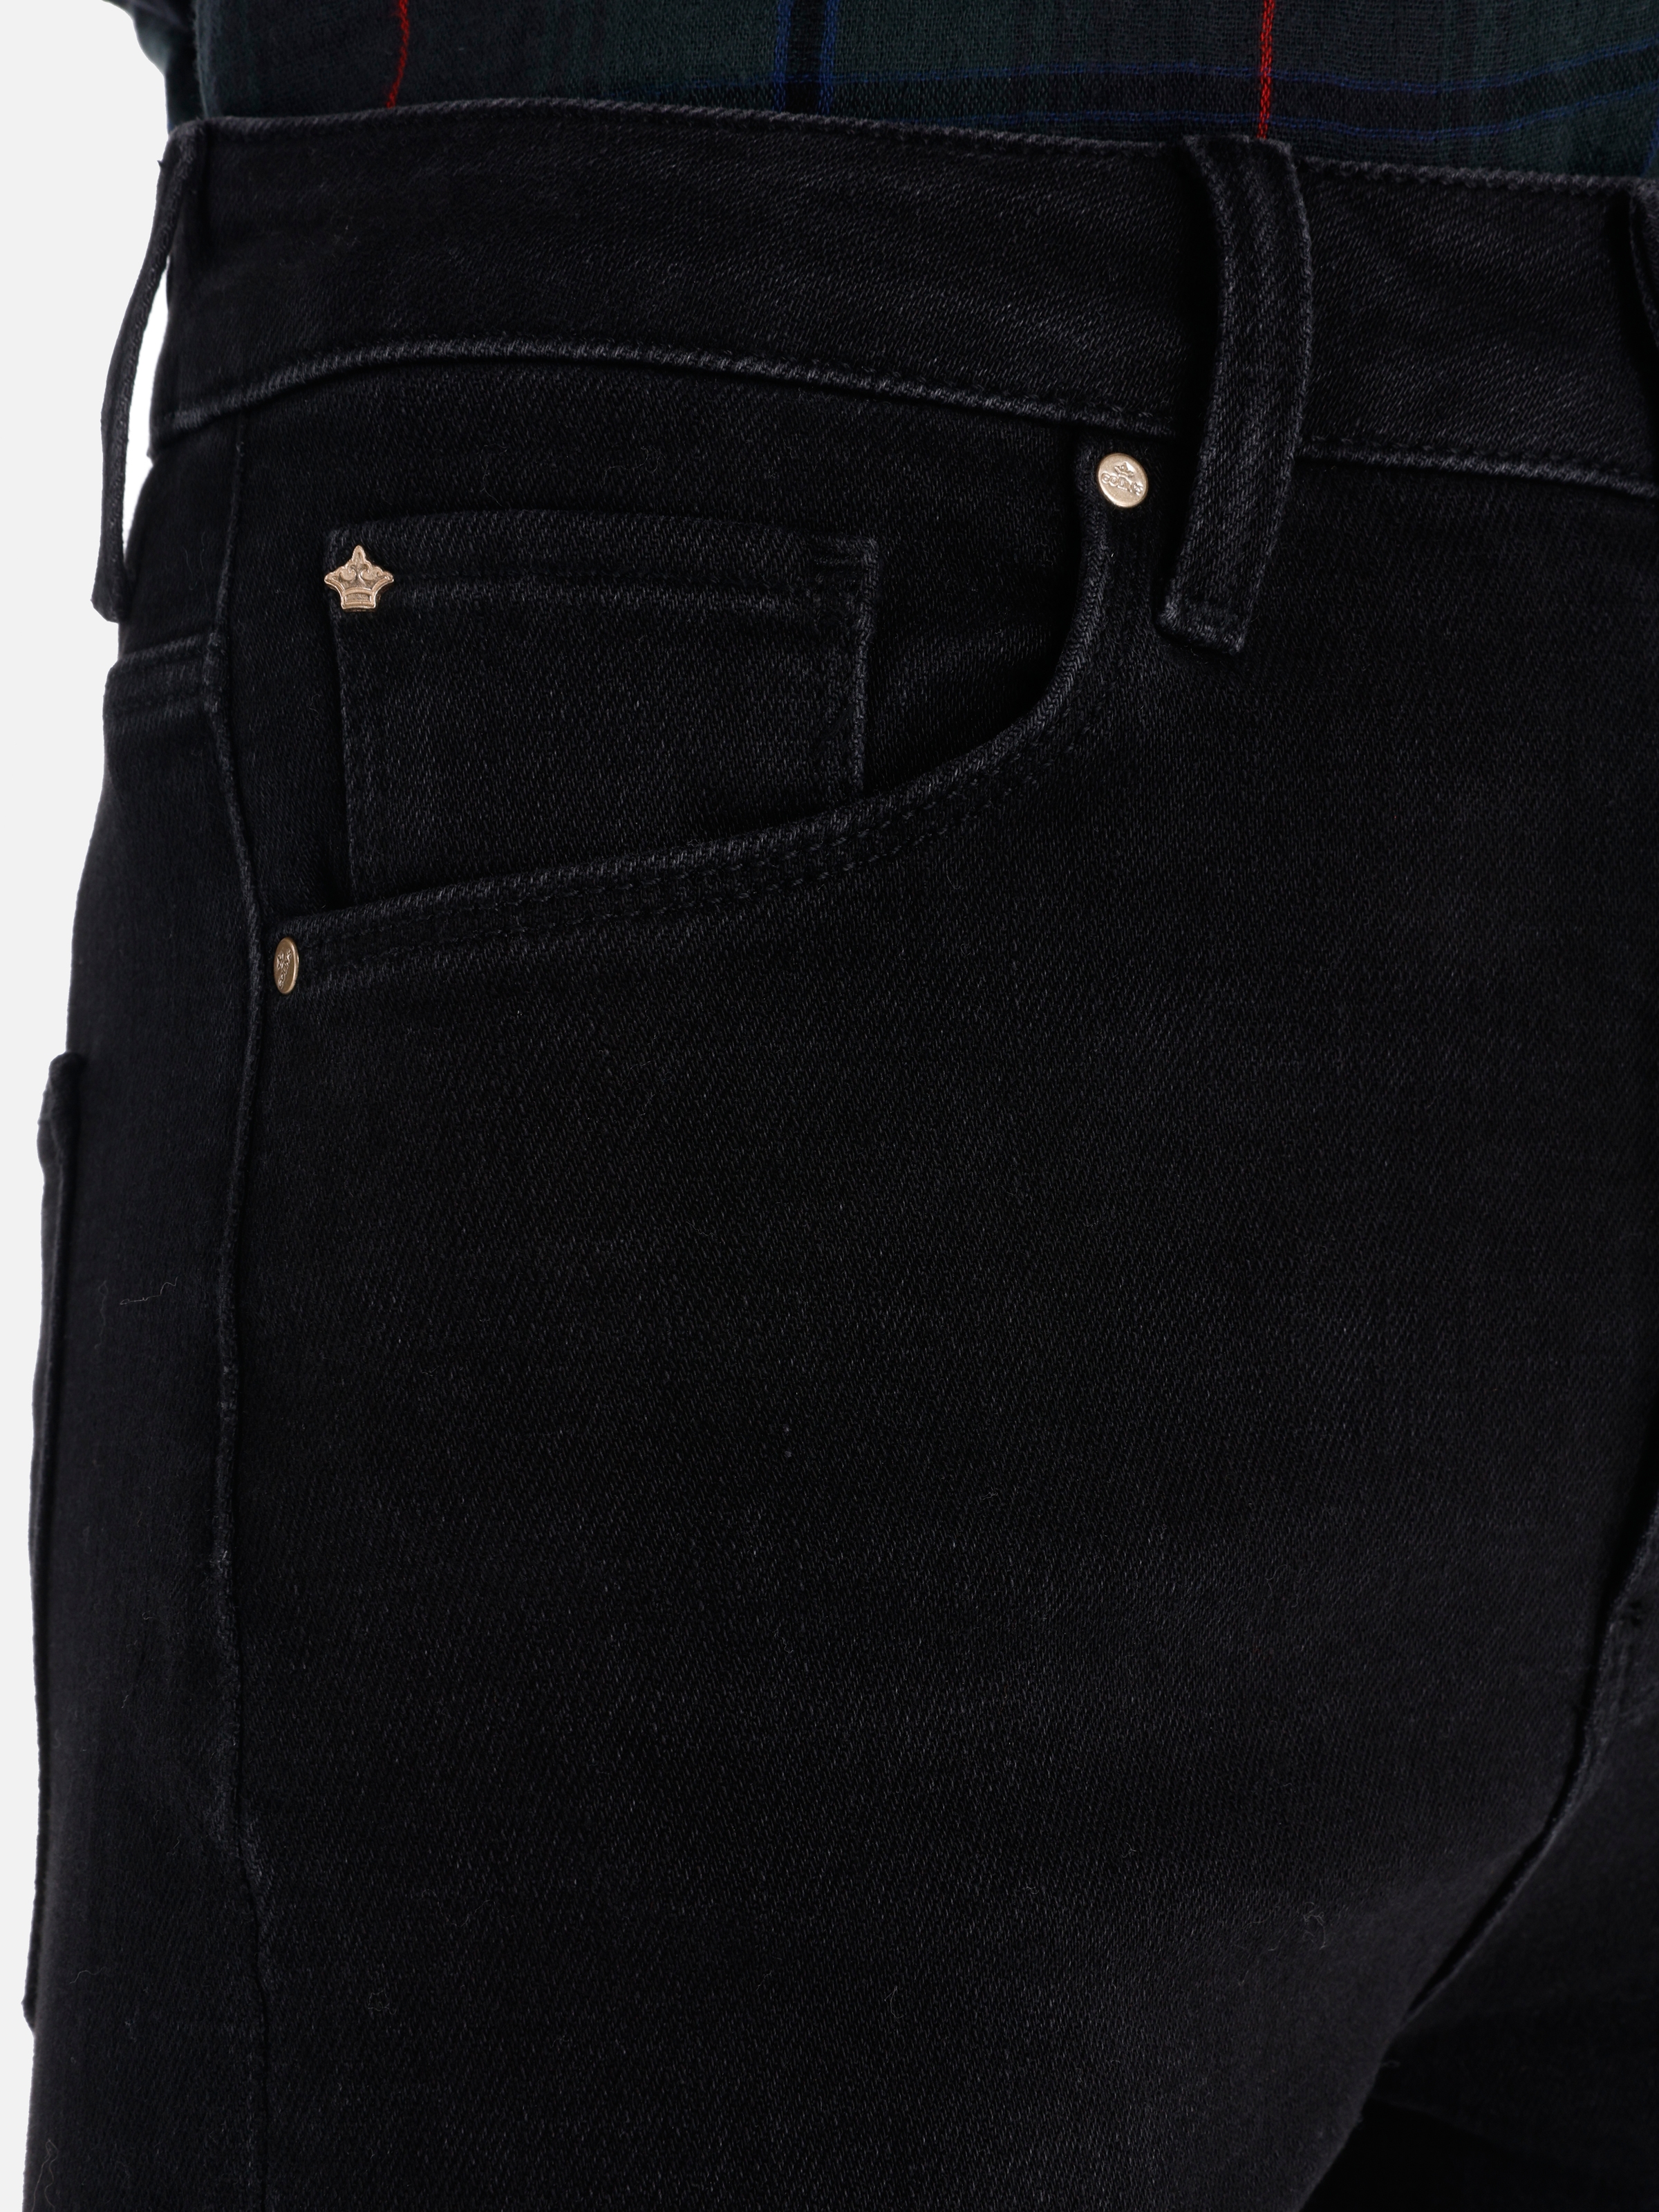 900 Laris Regular Fit Yüksek Bel Uzun Düz Paça Siyah Kadın Pantolon